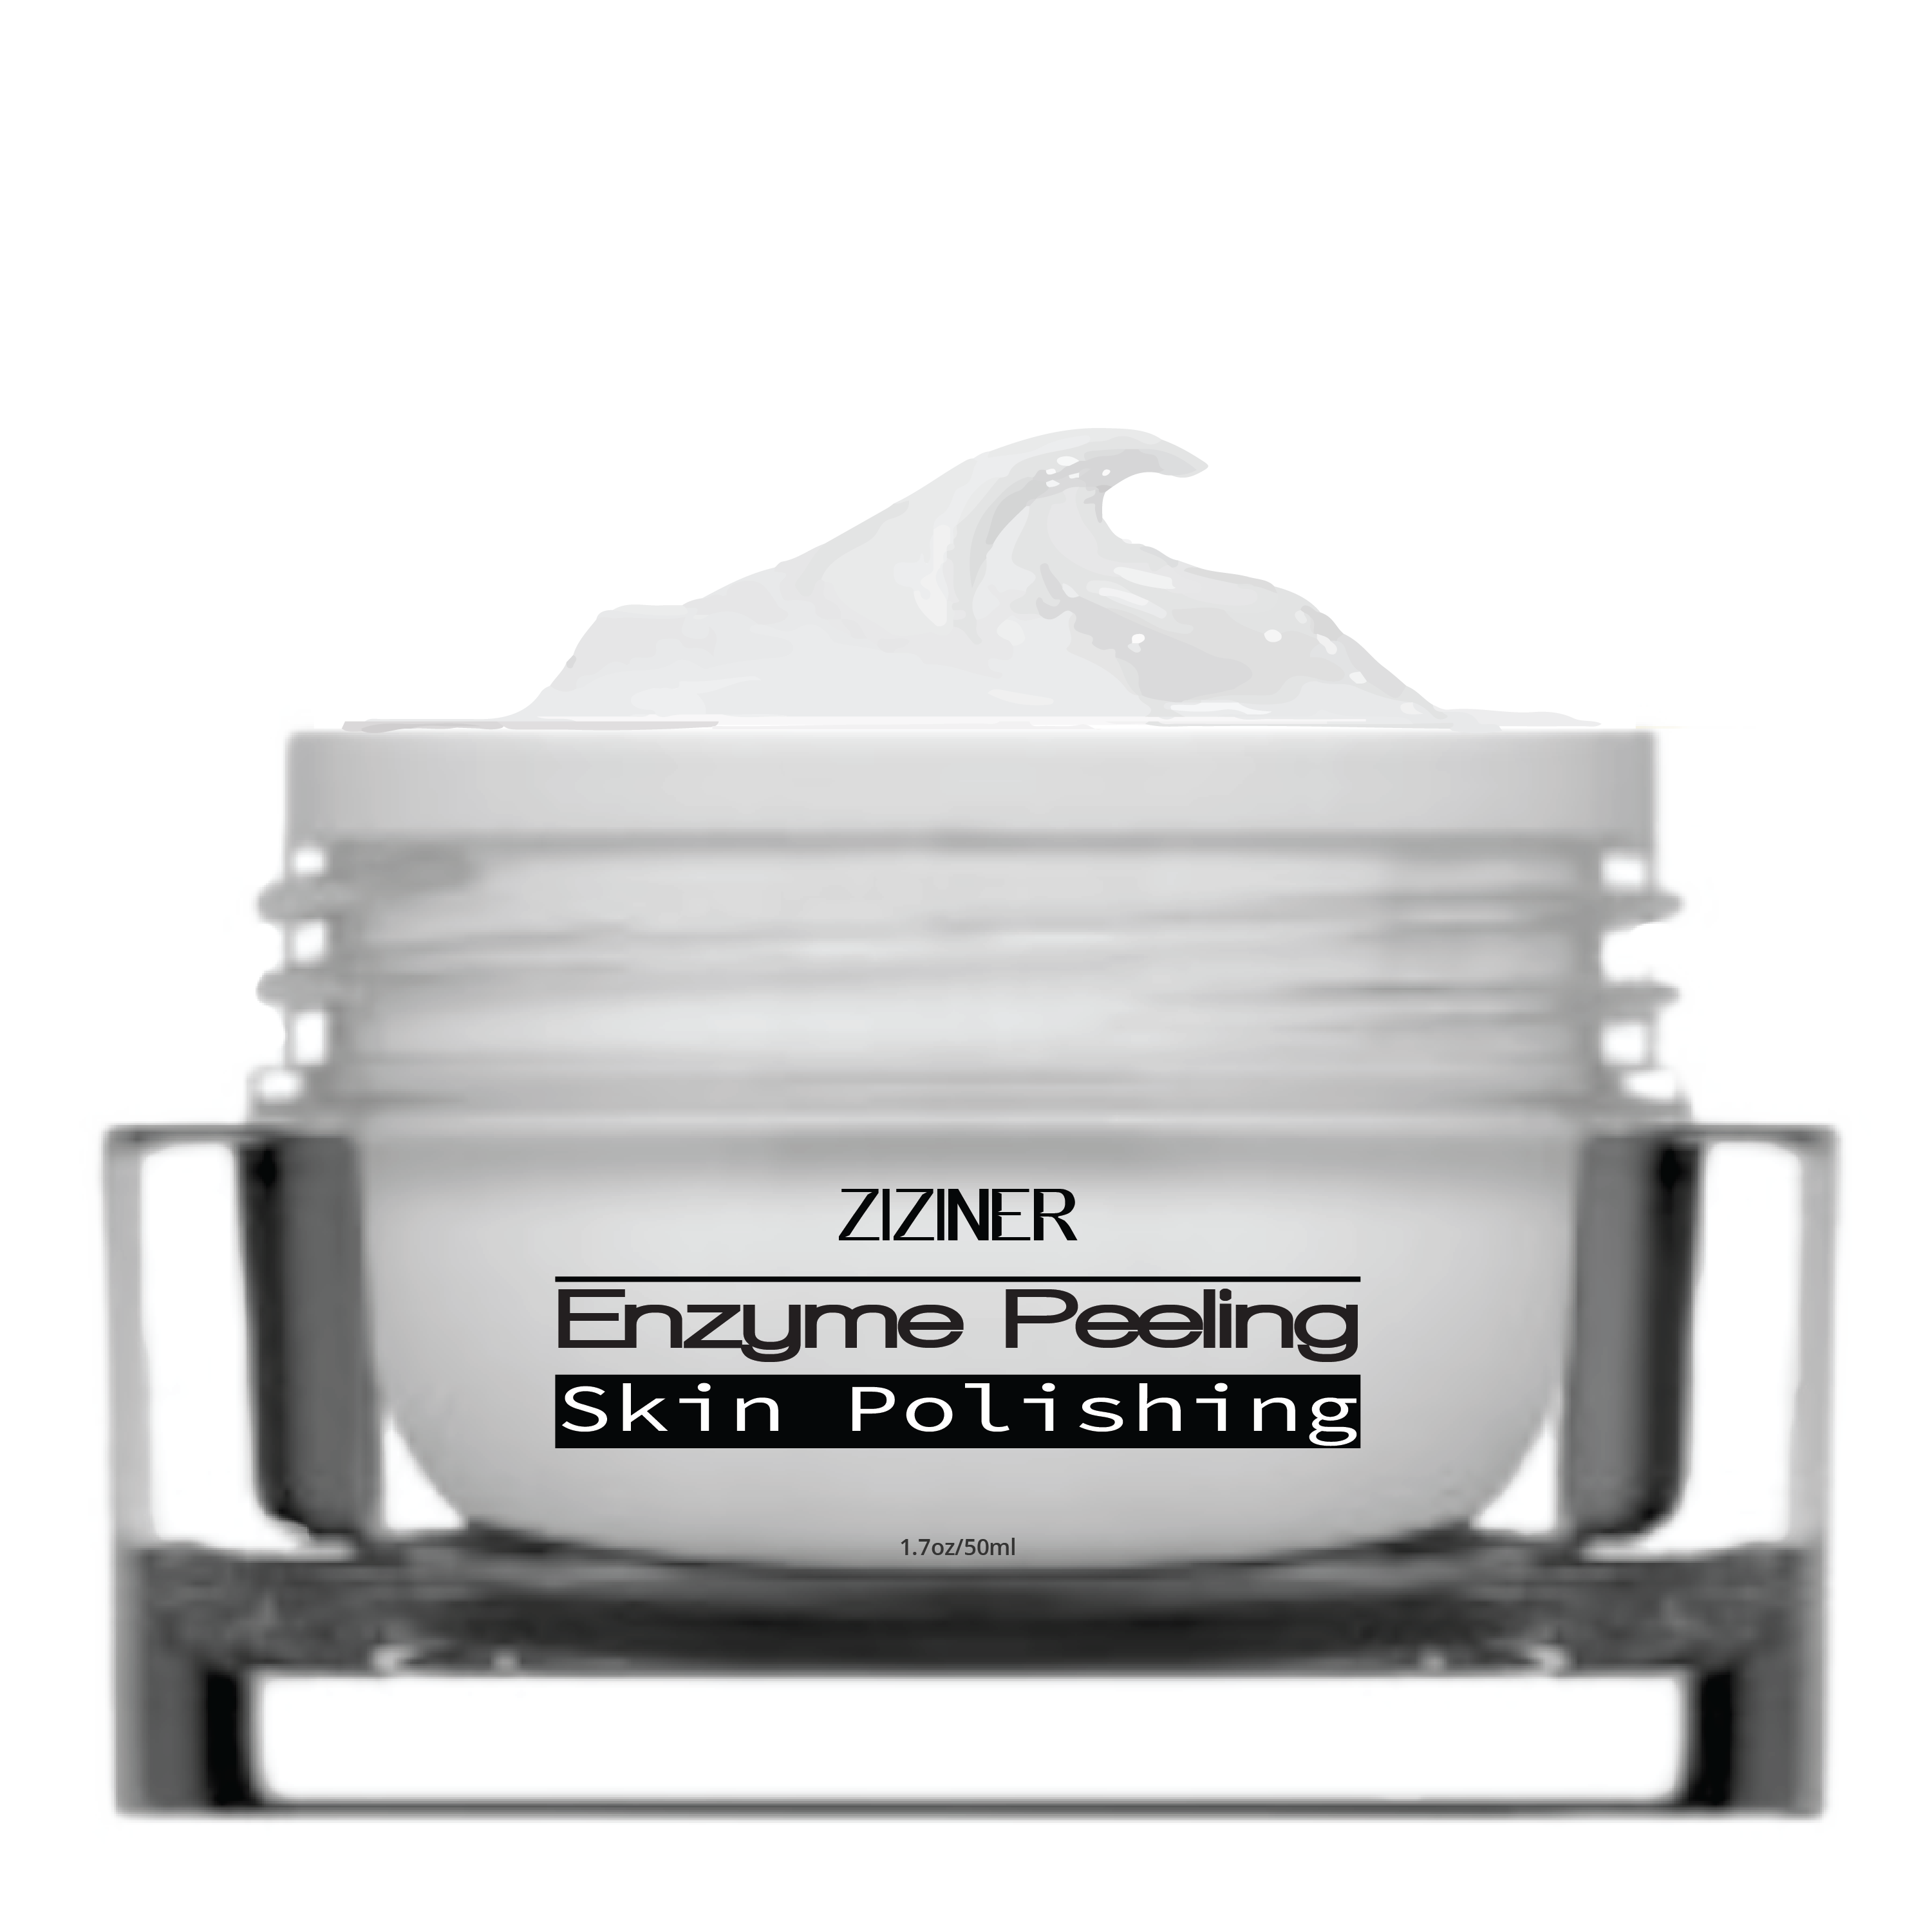  Enzyme Peeling ziziner skincare Perfumarie